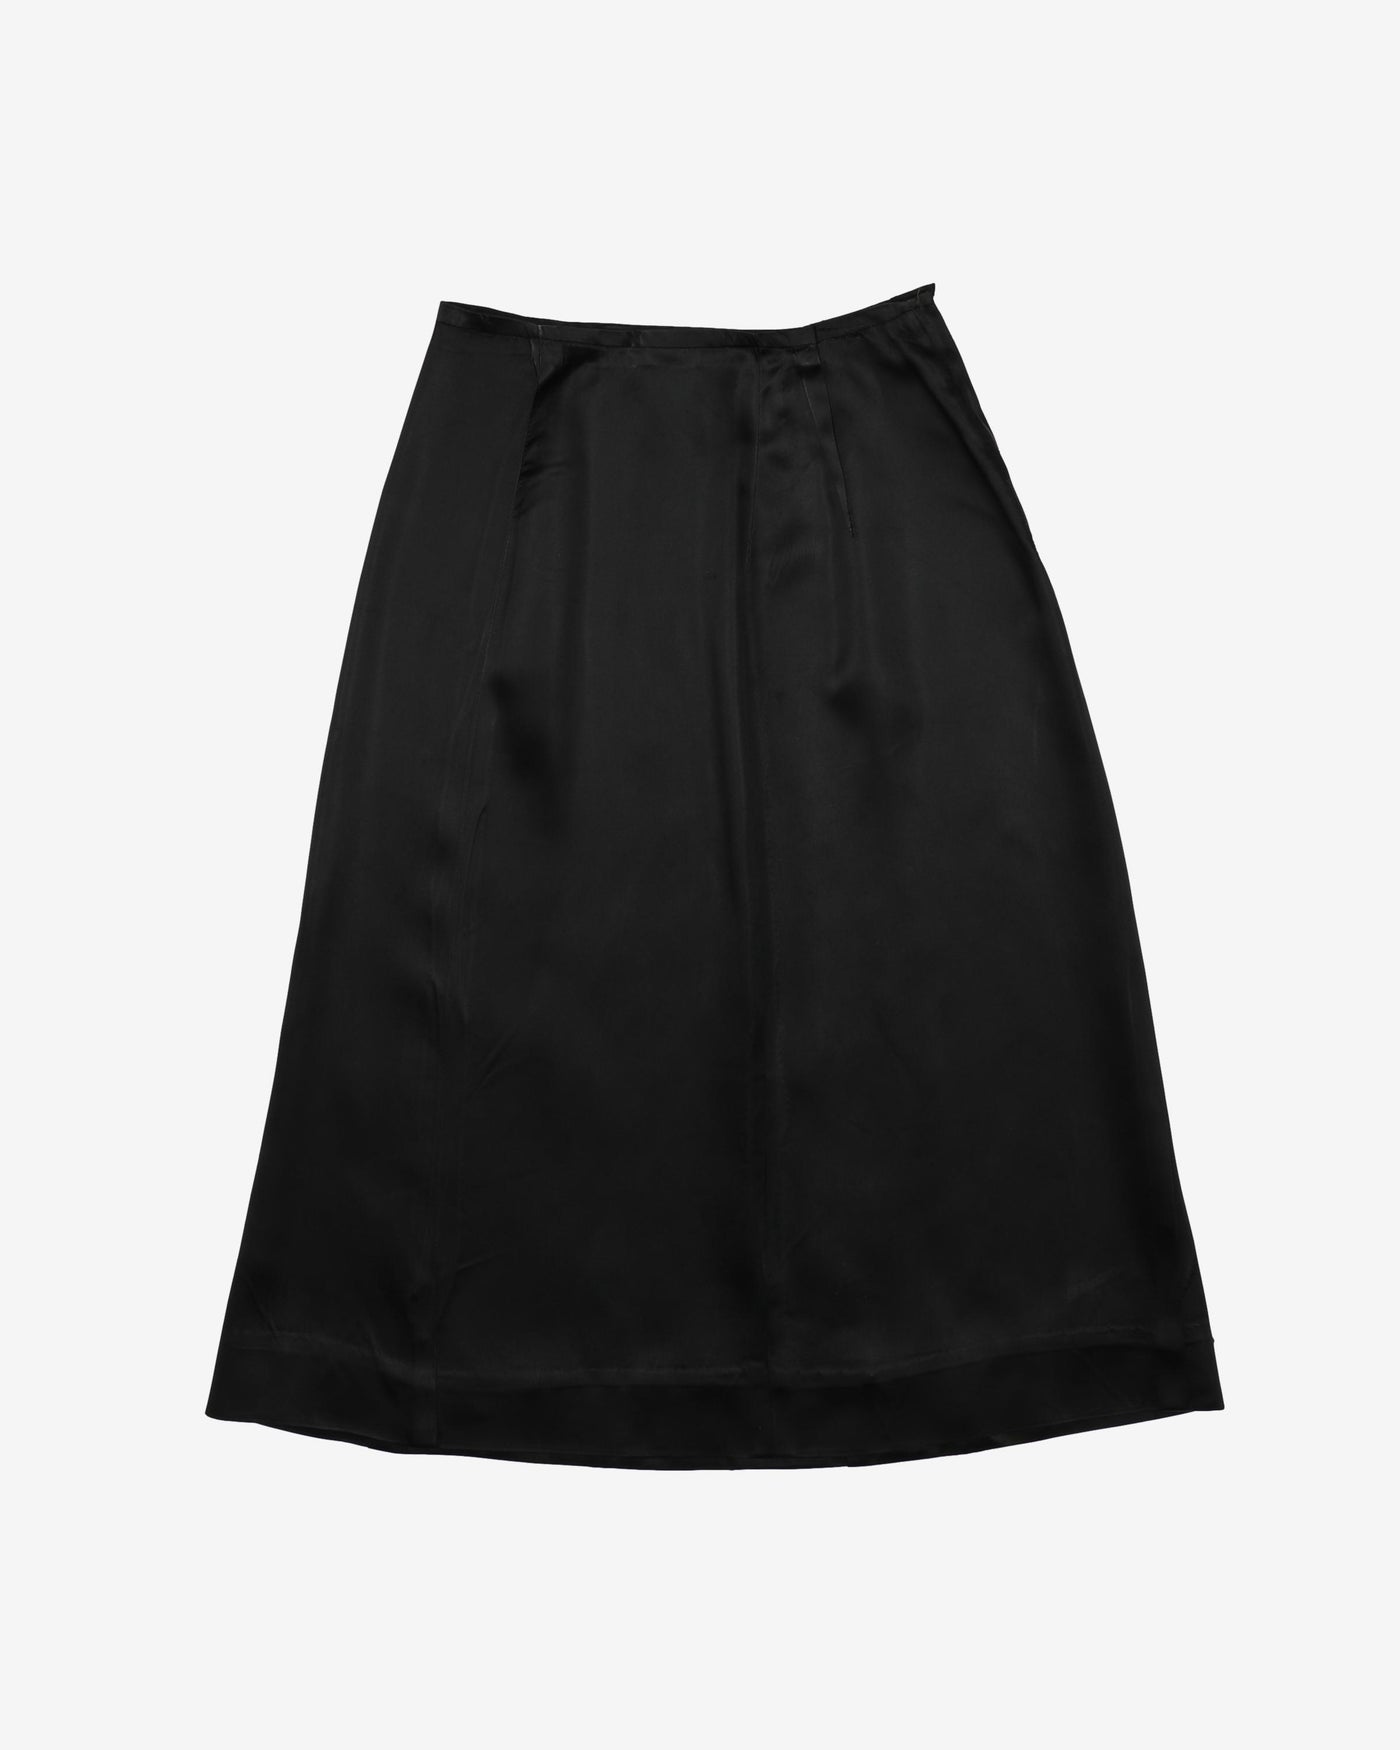 1950s Black Satin Midi Skirt - XS